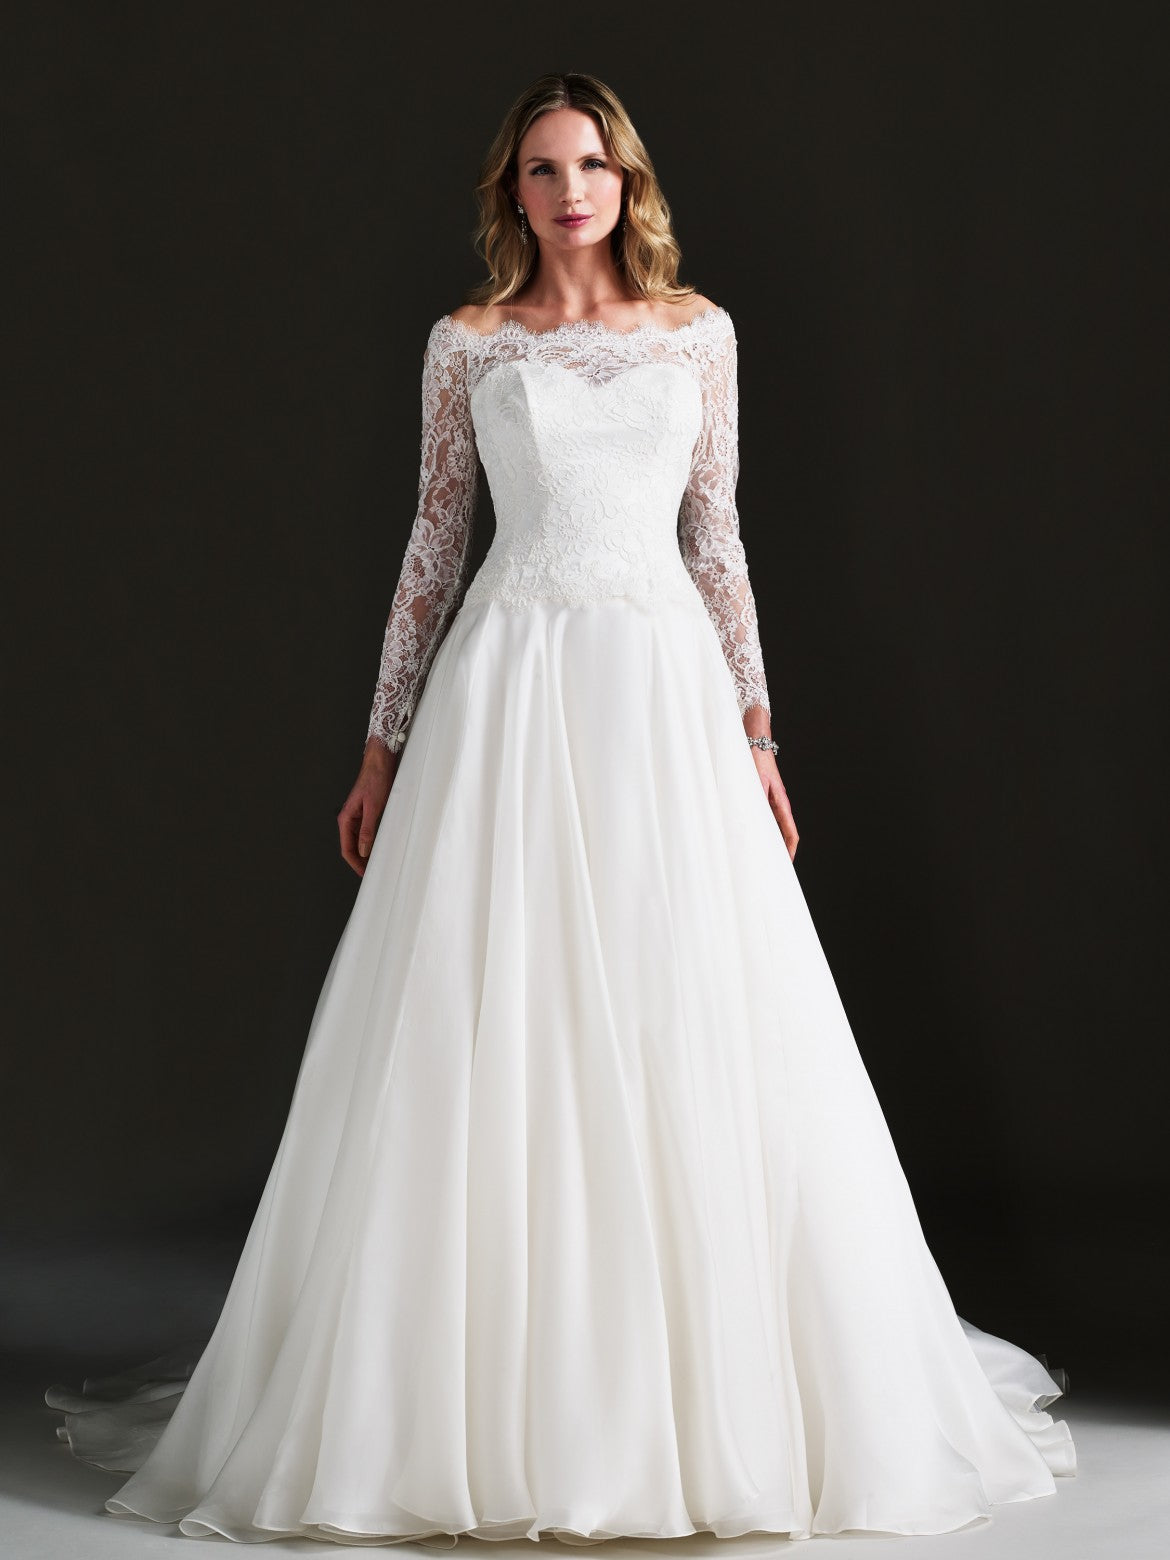 CARINA BAVERSTOCK BRIDAL DESIGNER WEDDING DRESS EVENT – 13TH FEBRUARY